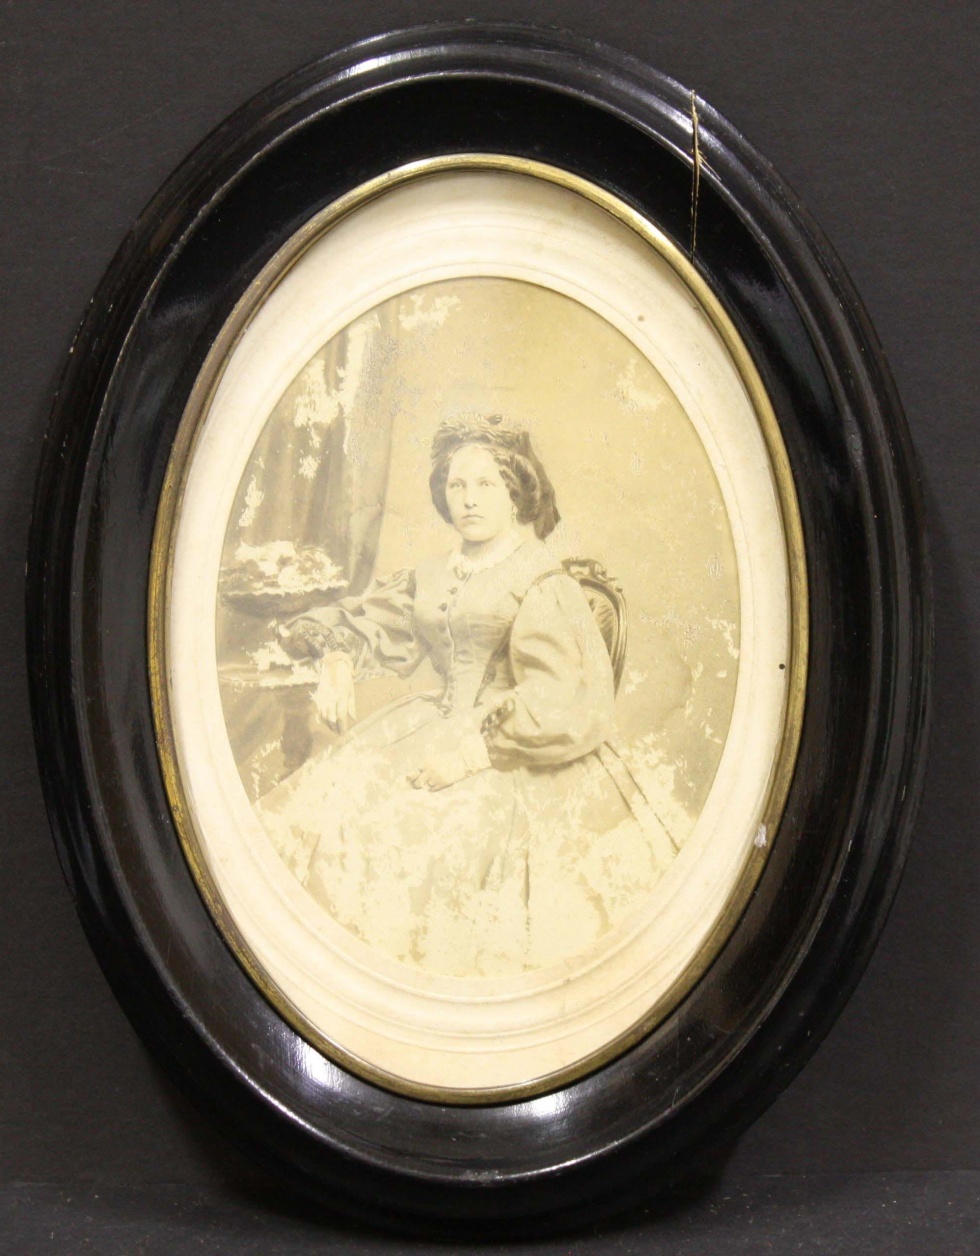 Fotografie, gerahmt, sitzende Frau im Reifrock (Museum Wolmirstedt RR-F)